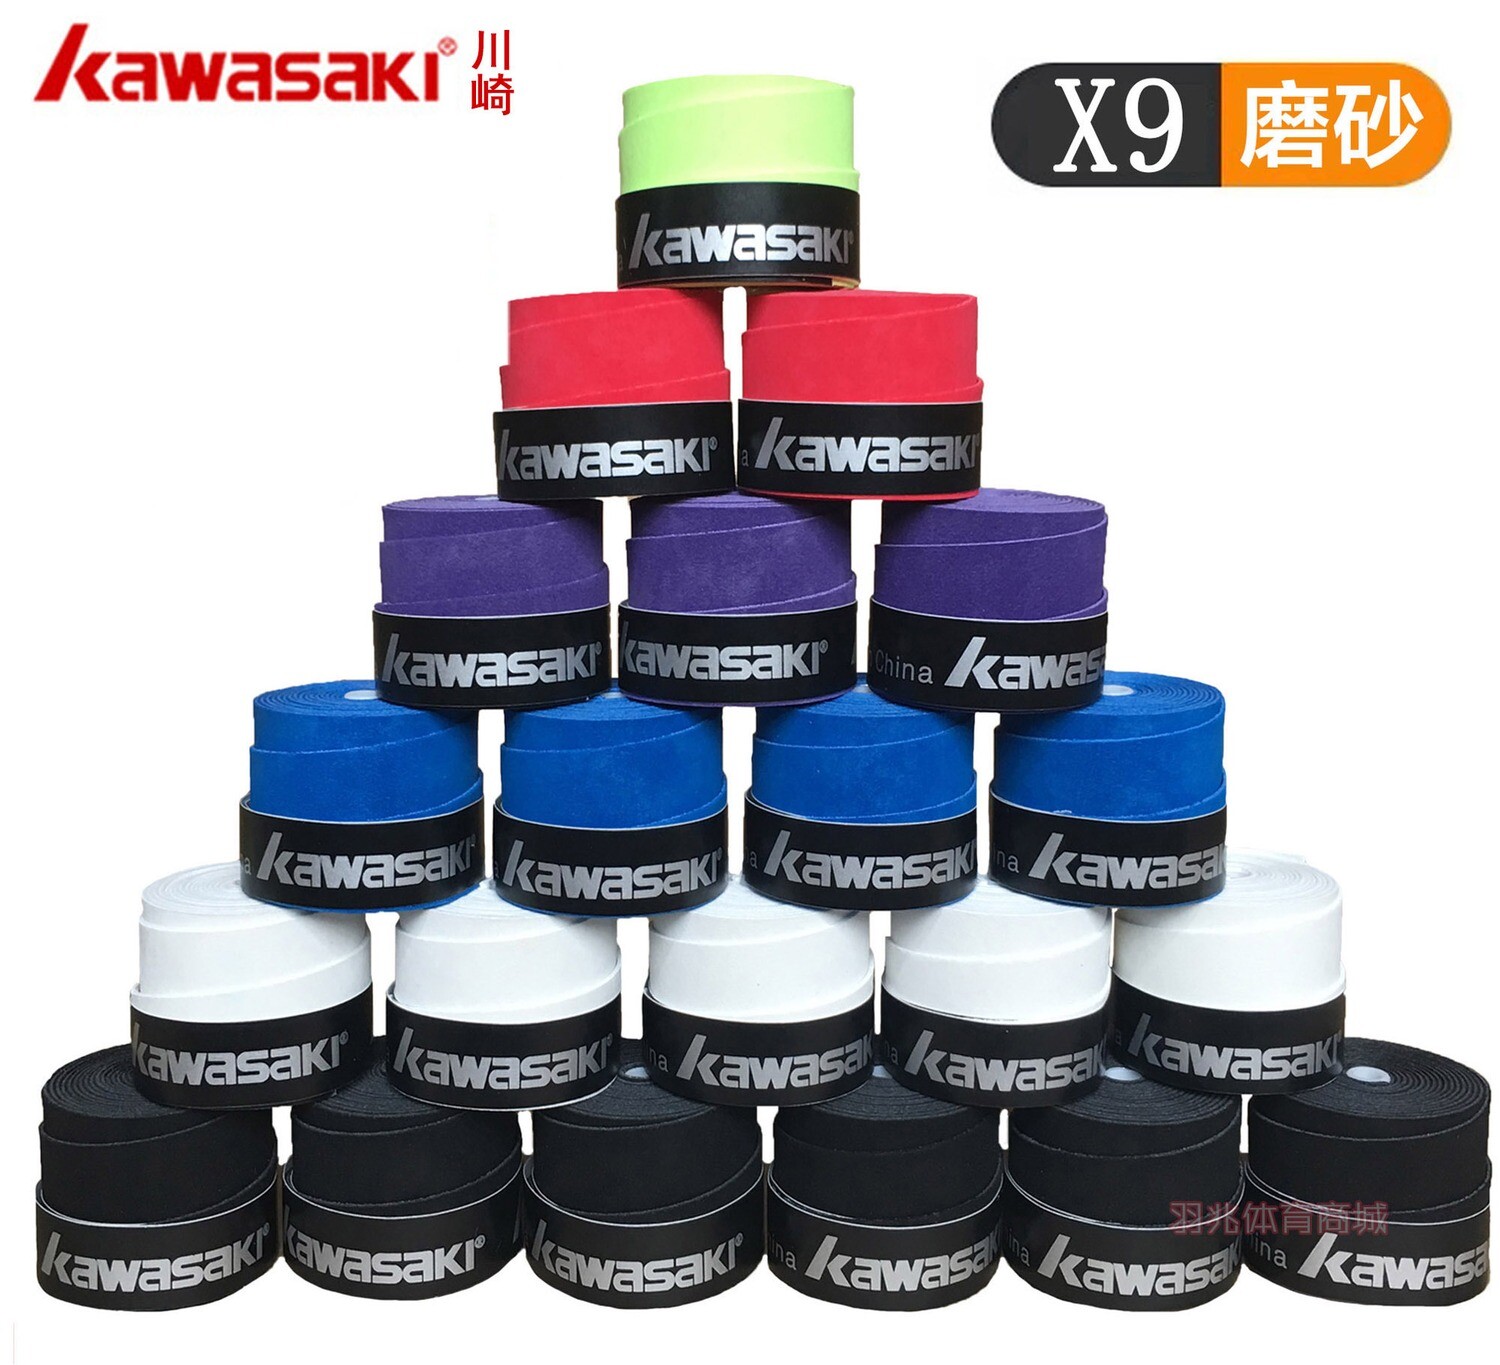 Kawasaki X9 Overgrips - 60 Pack Assorted